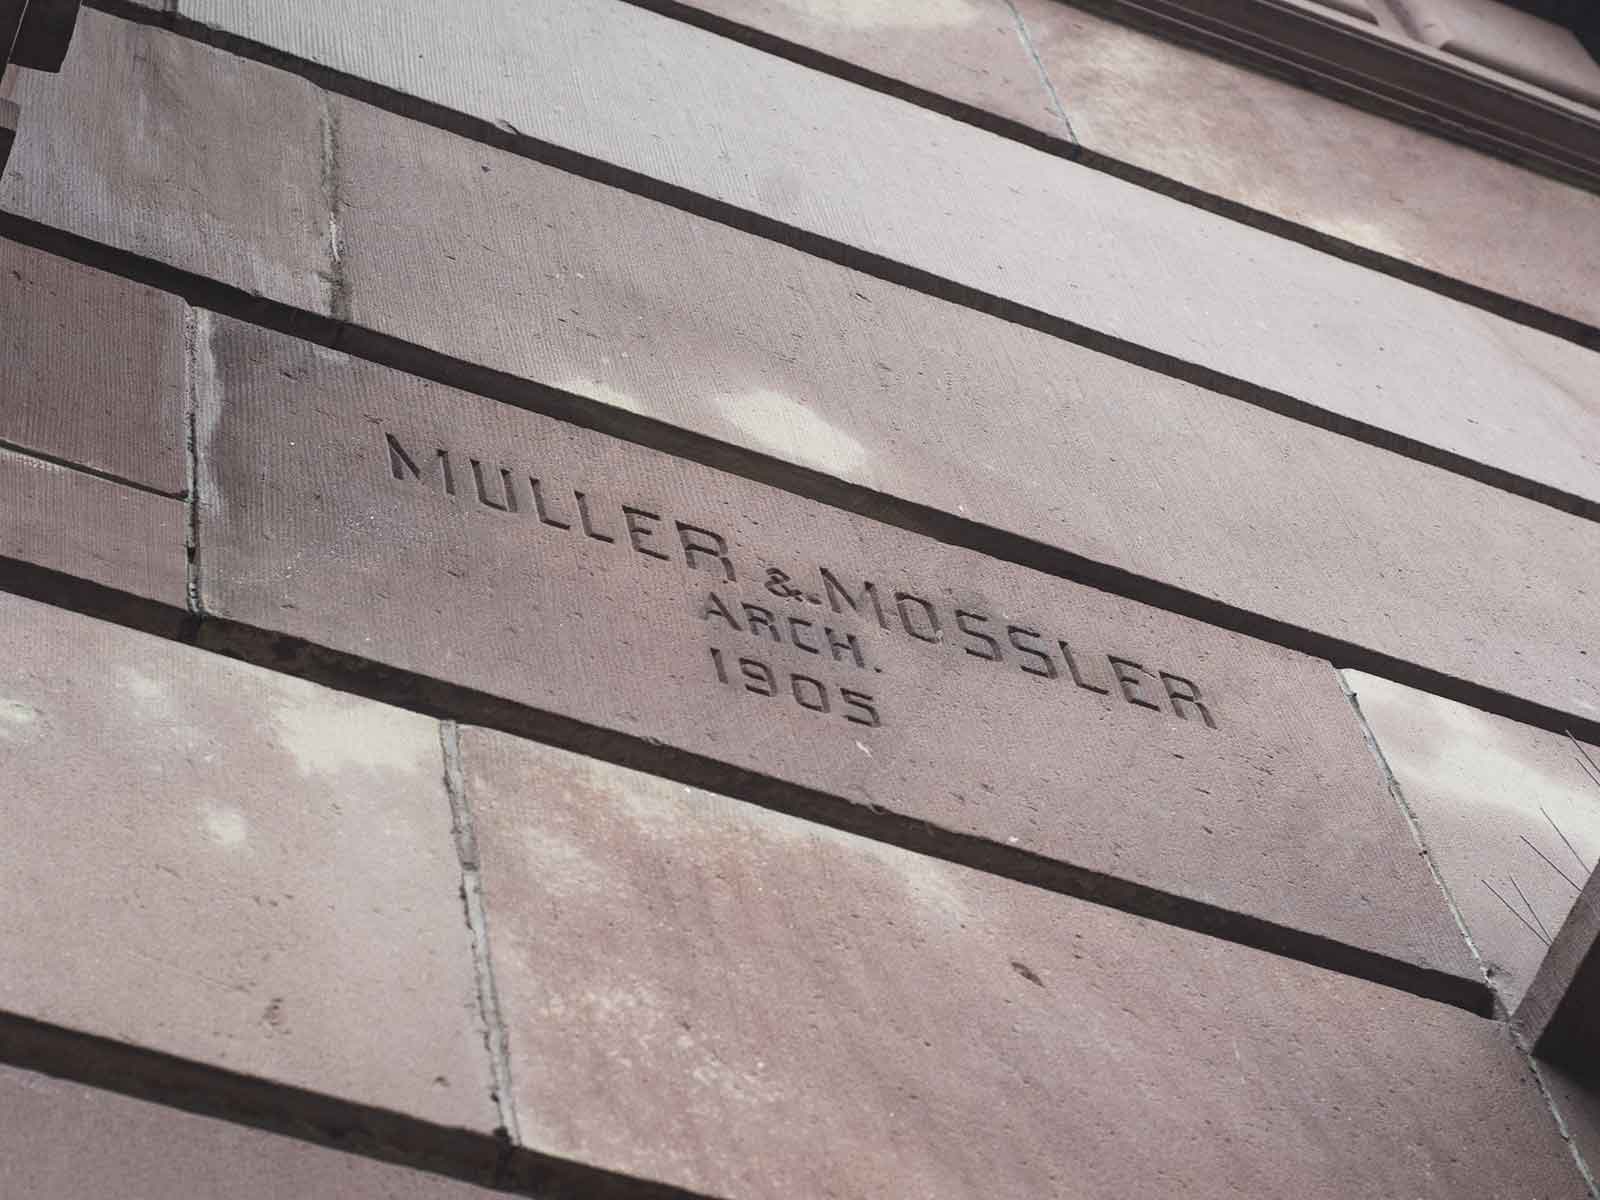 Muller-&-Mossler-arch-1905